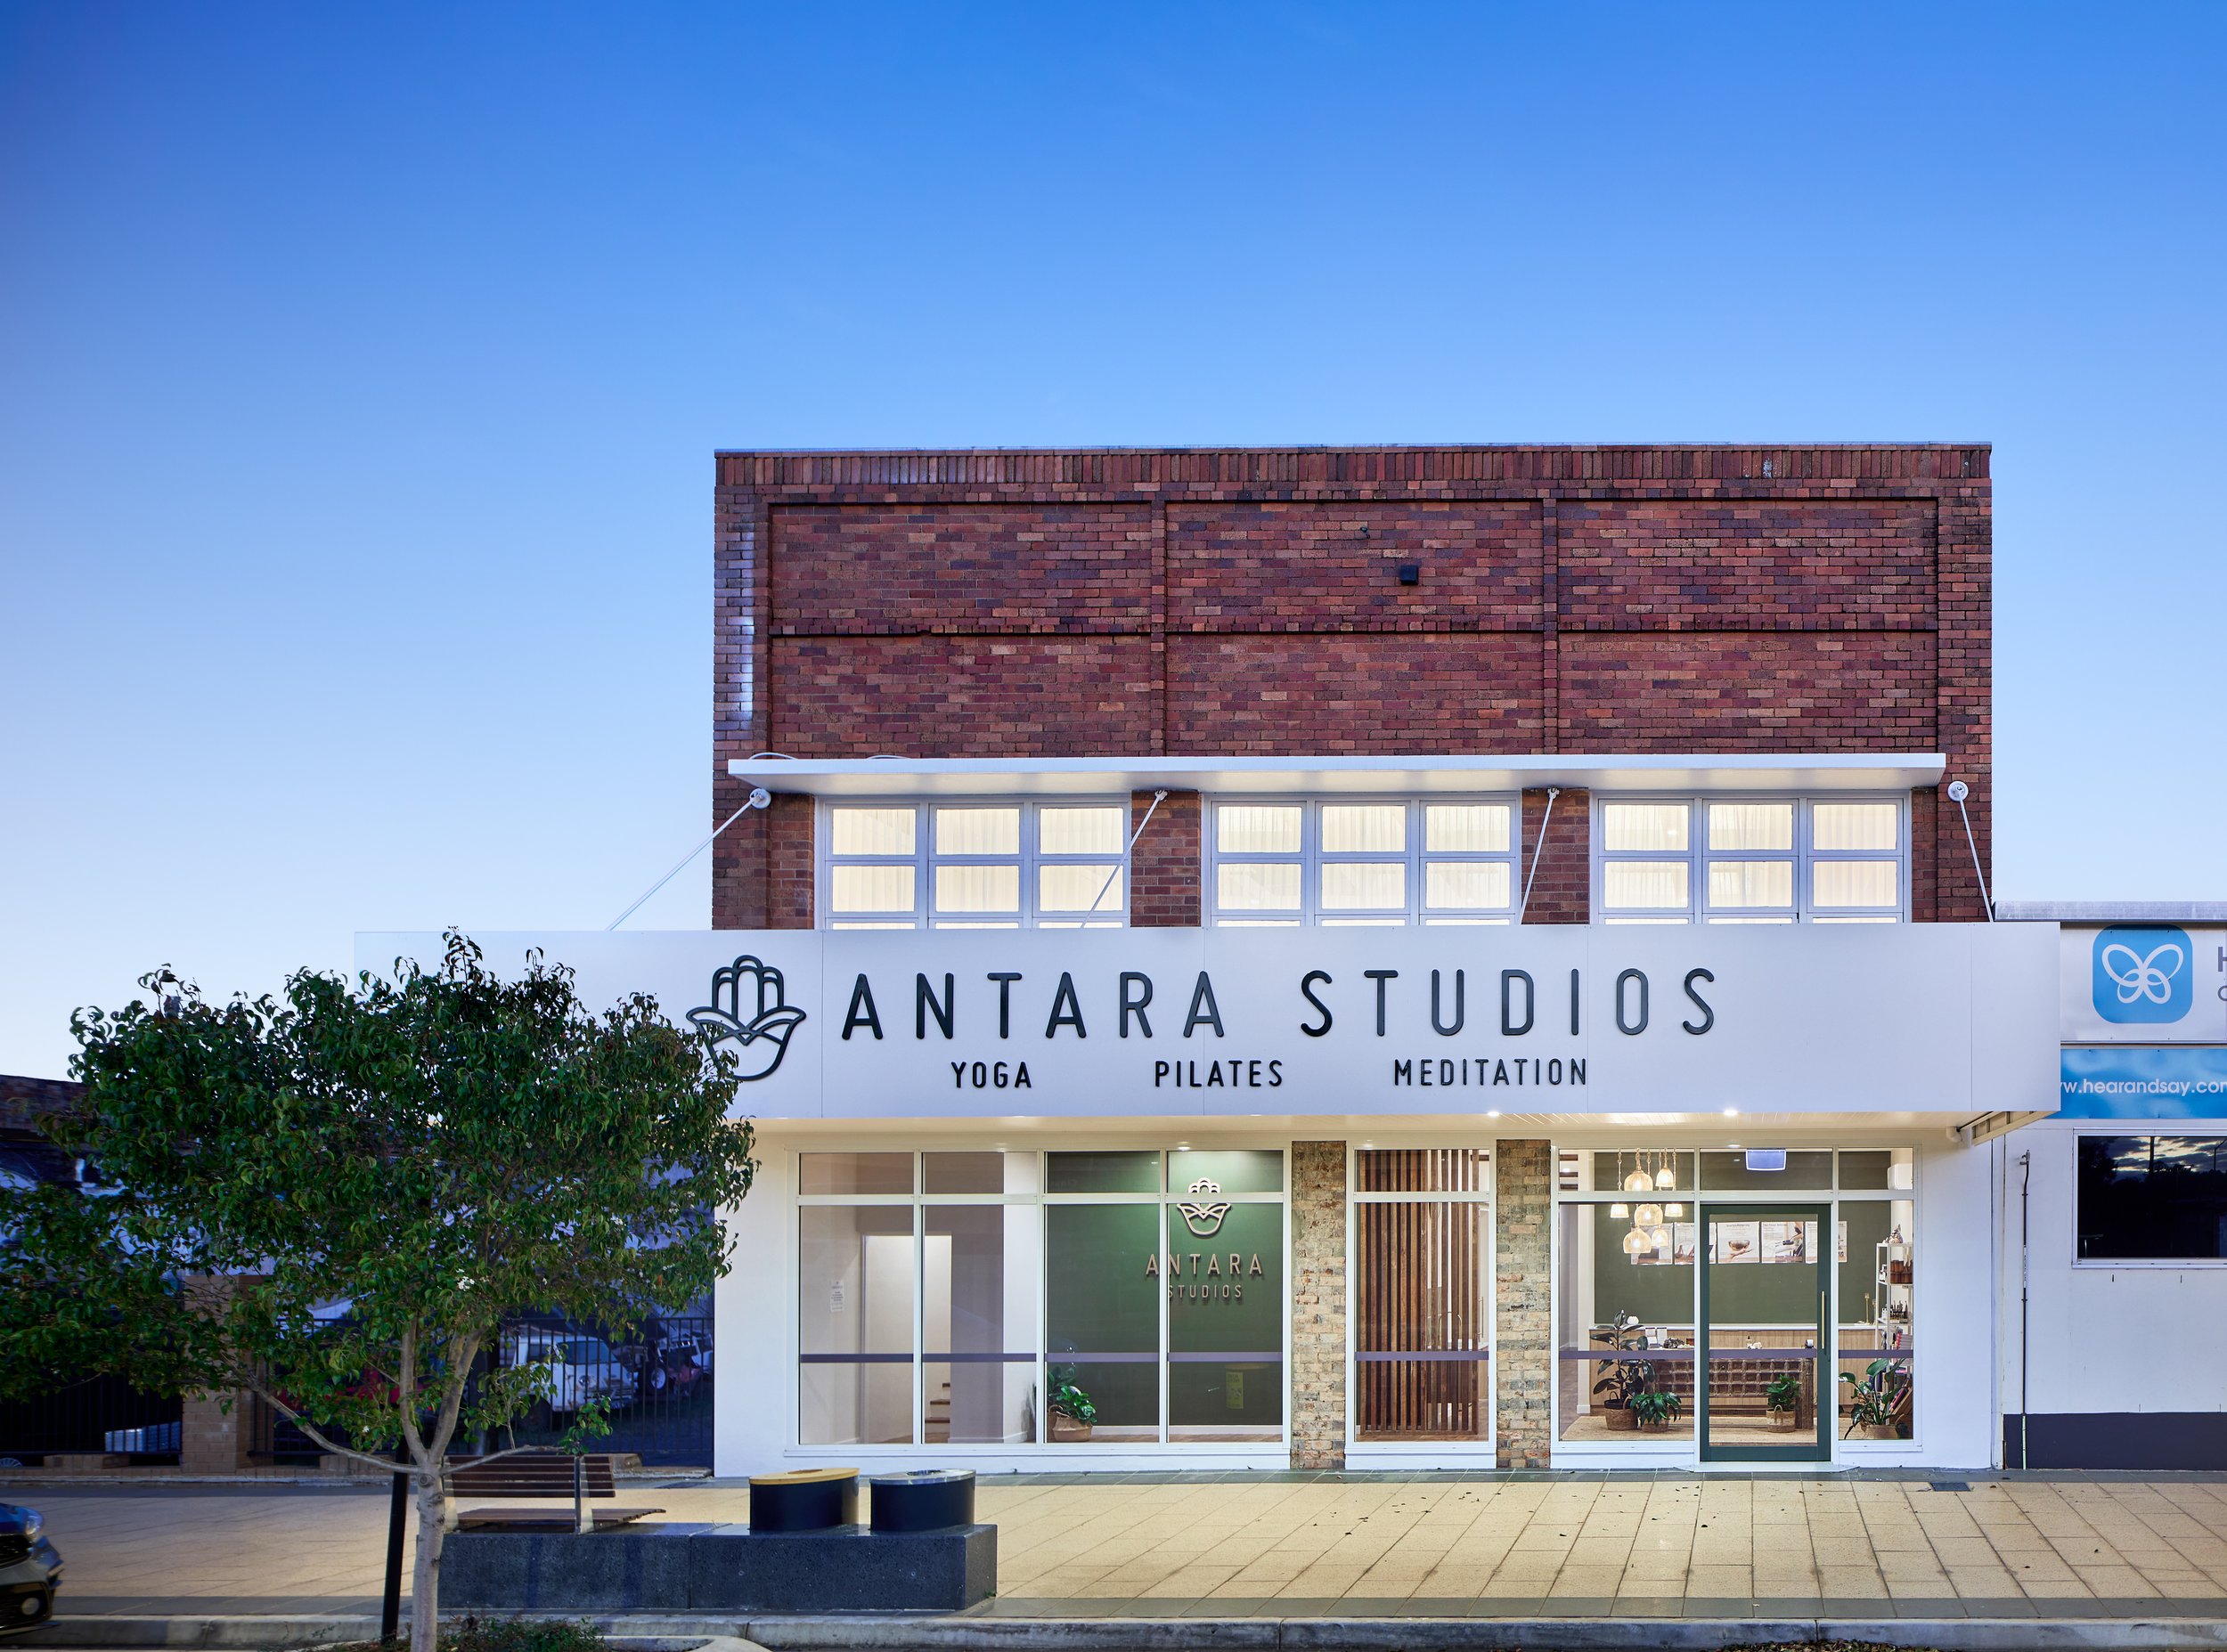  Antara Studios  